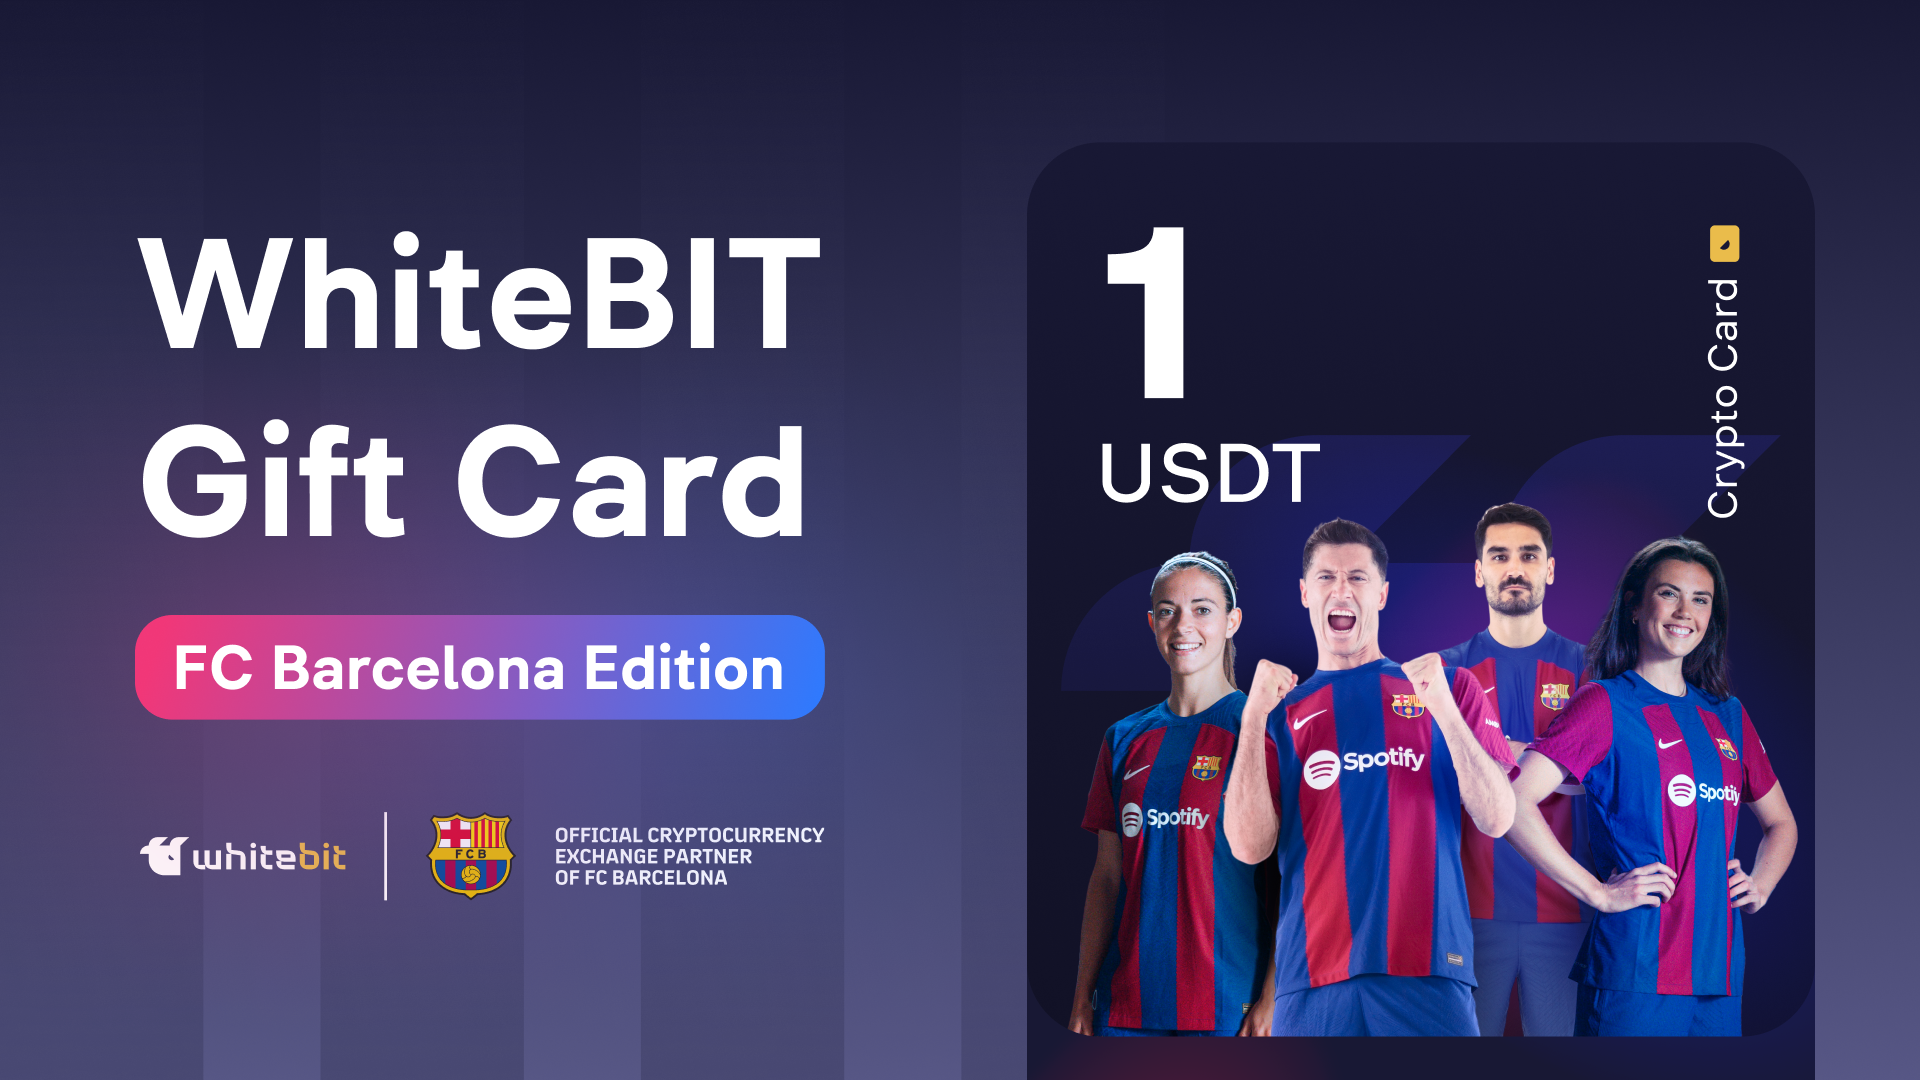 WhiteBIT - FC Barcelona Edition - 1 USDT Gift Card 1.39 $